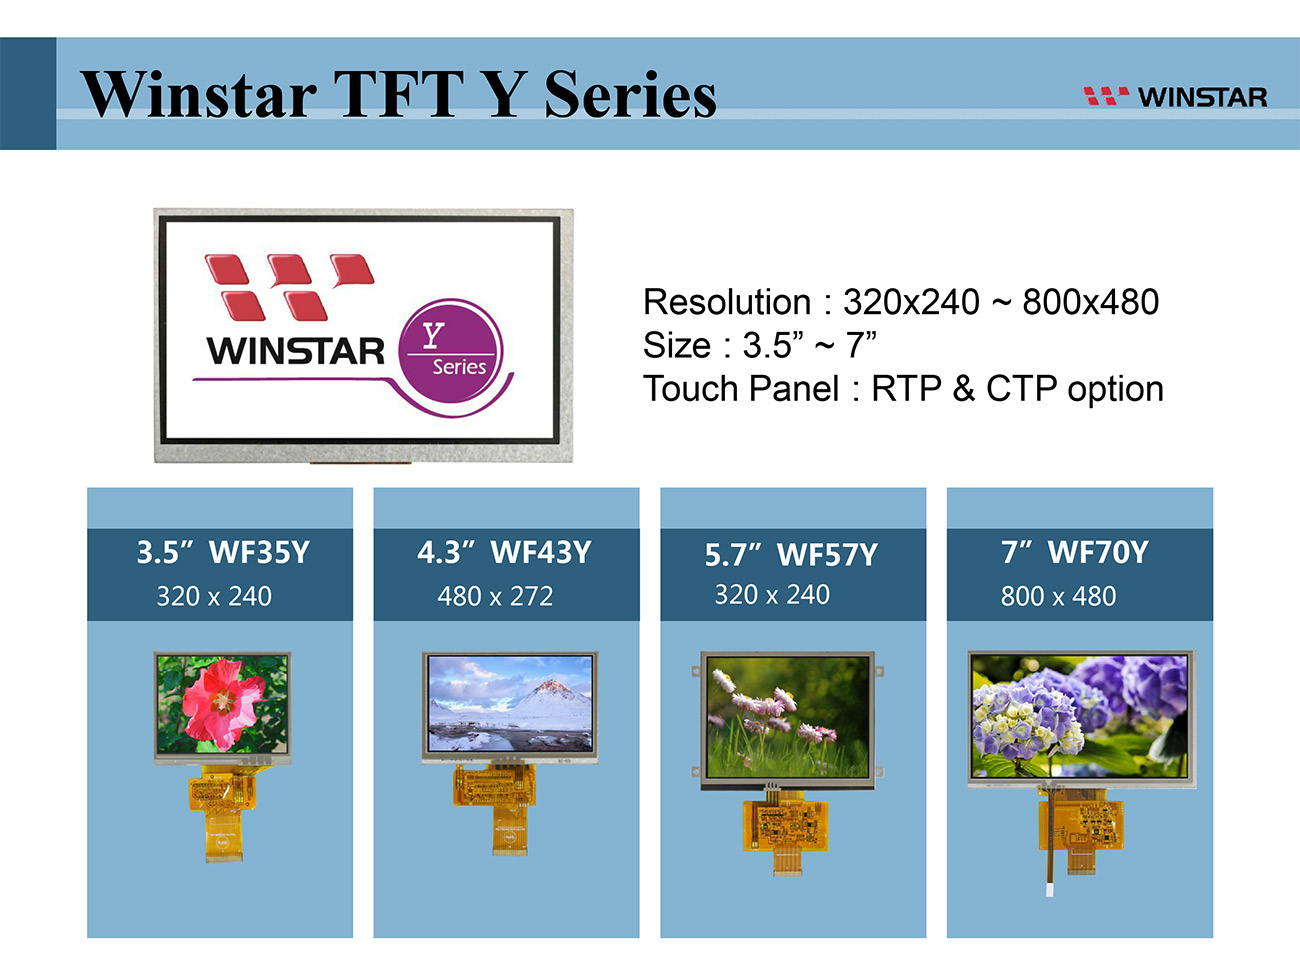  LCD TFT Winstar – Série Y - 3.5 tft lcd, 3.5" tft lcd, tft lcd 3.5, tft lcd 3.5", 3.5 tft display, tft display 3.5, 4.3 tft lcd, 4.3 tft lcd, 4.3" tft lcd, tft lcd 4.3, tft lcd 4.3", 4.3 tft display, tft display 4.3, 5.7 tft lcd, 5.7" tft lcd, tft lcd 5.7, tft lcd 5.7", 5.7 tft display, tft display 5.7, 7 tft lcd, 7" tft lcd, tft lcd 7, tft lcd 7", 7 tft display, tft display 7, 7.0 tft lcd, 7.0 tft display